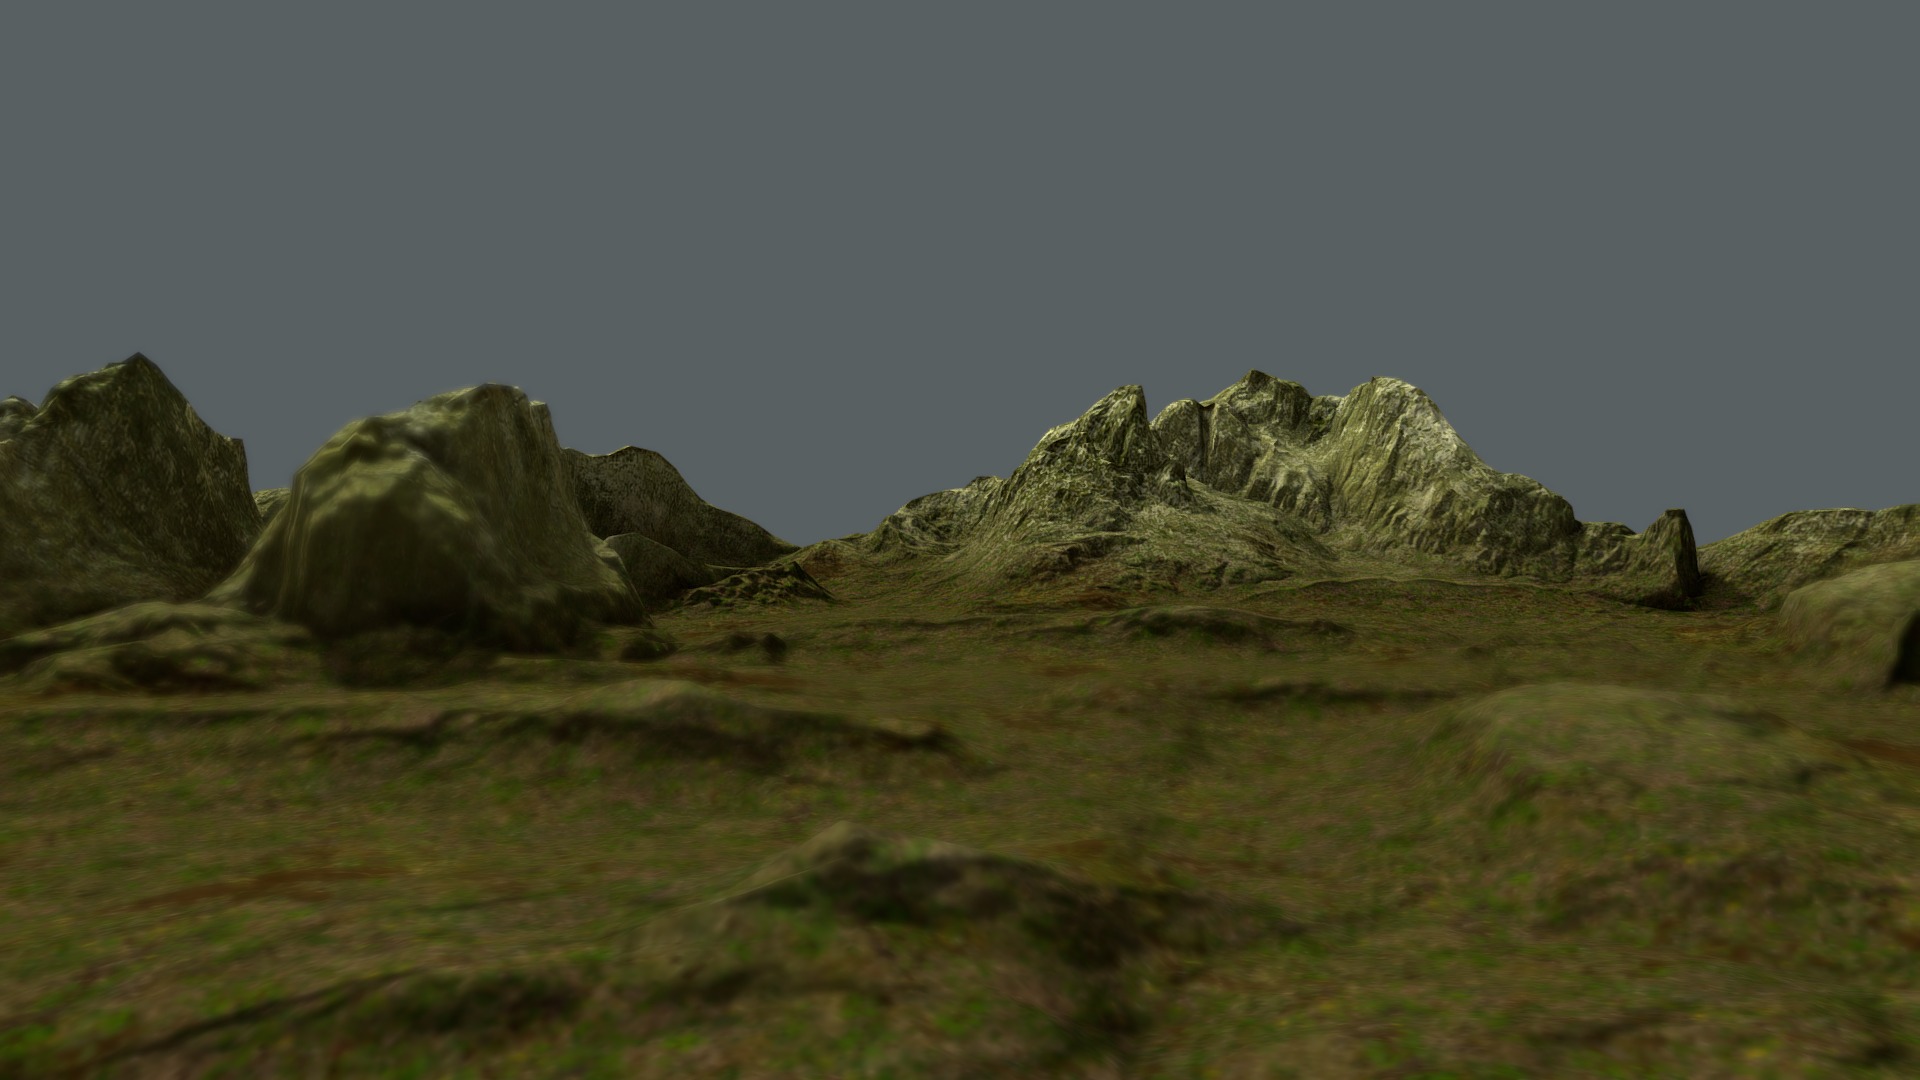 3D model Mossy Rock Terrain - This is a 3D model of the Mossy Rock Terrain. The 3D model is about a grassy area with rocks in it.